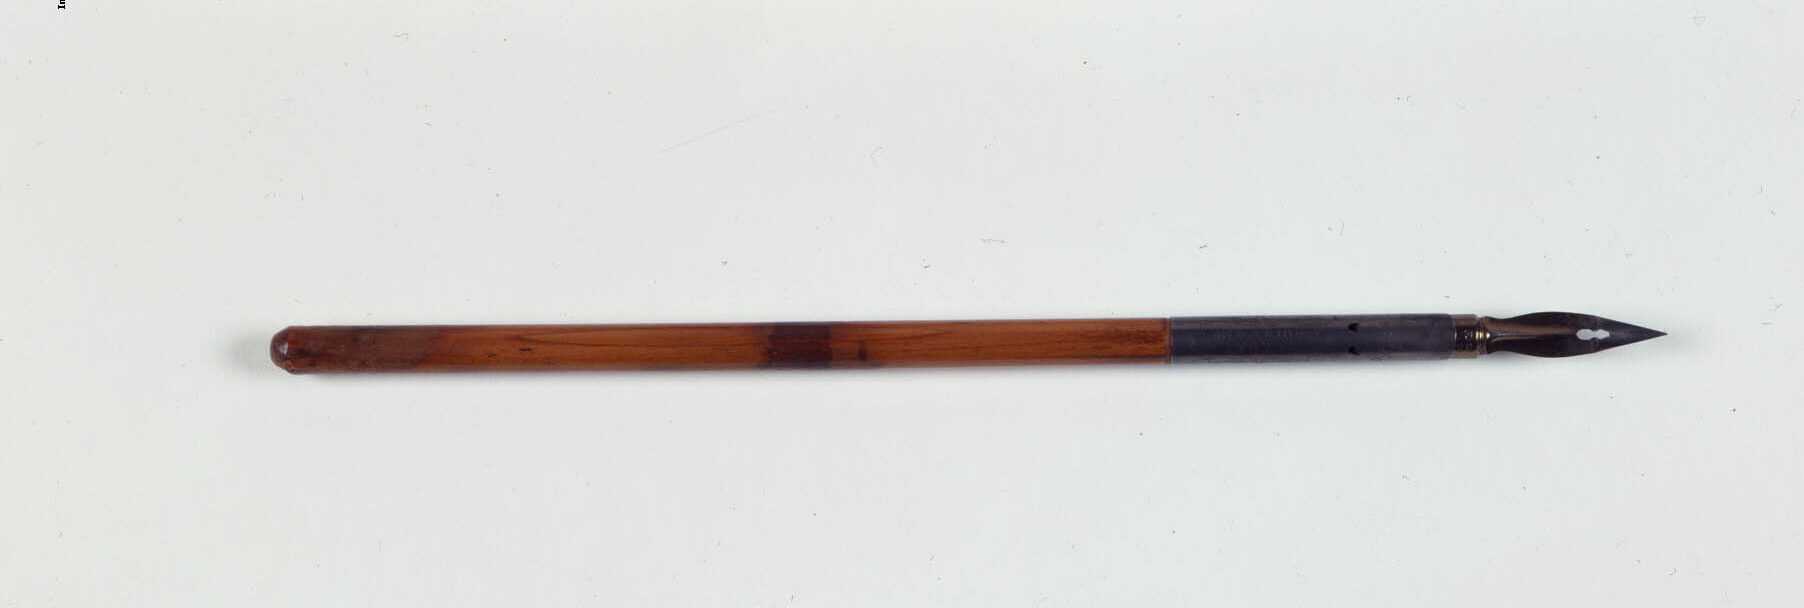 Photograph of Emancipation Proclamation pen